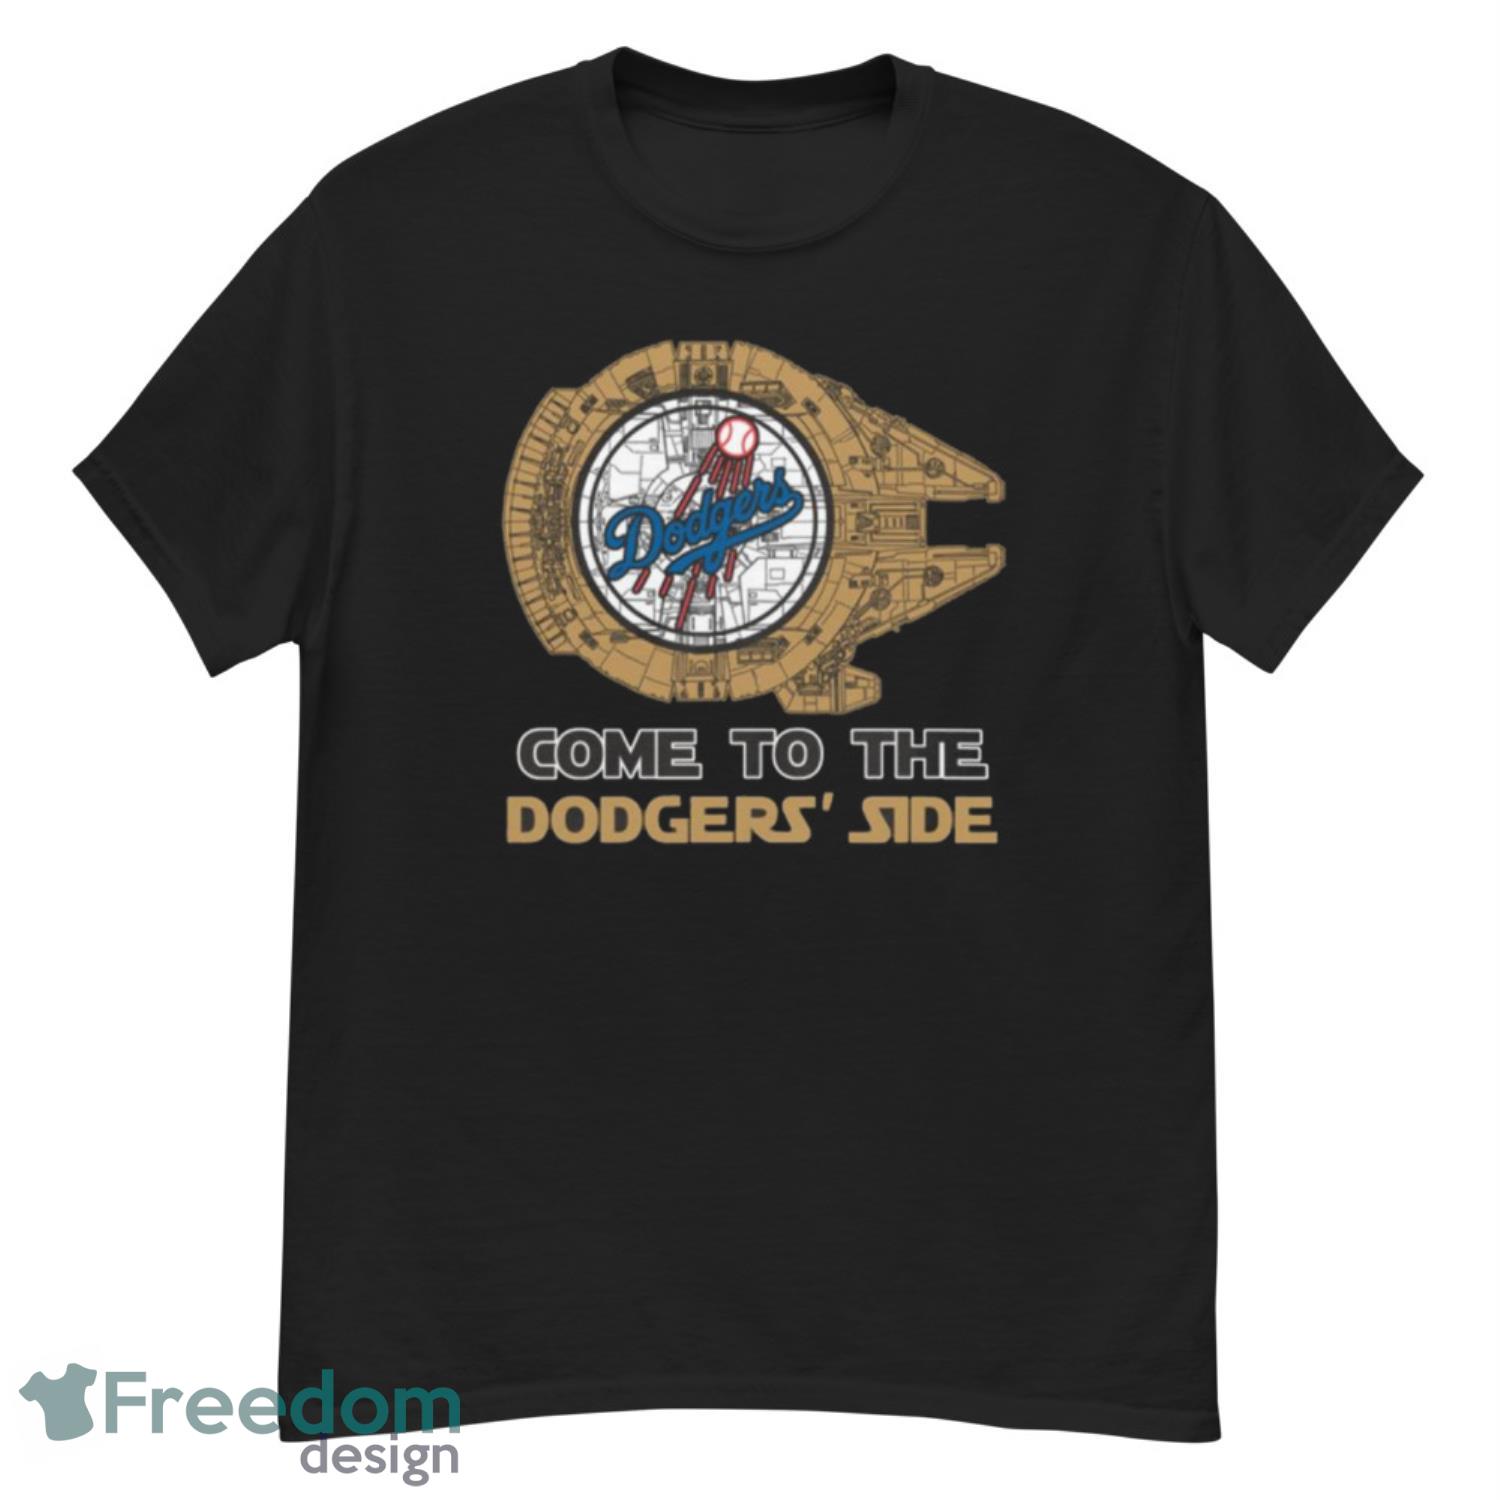 Los Angeles Dodgers Baseball Black Classic Men T-Shirt Size S-3XL